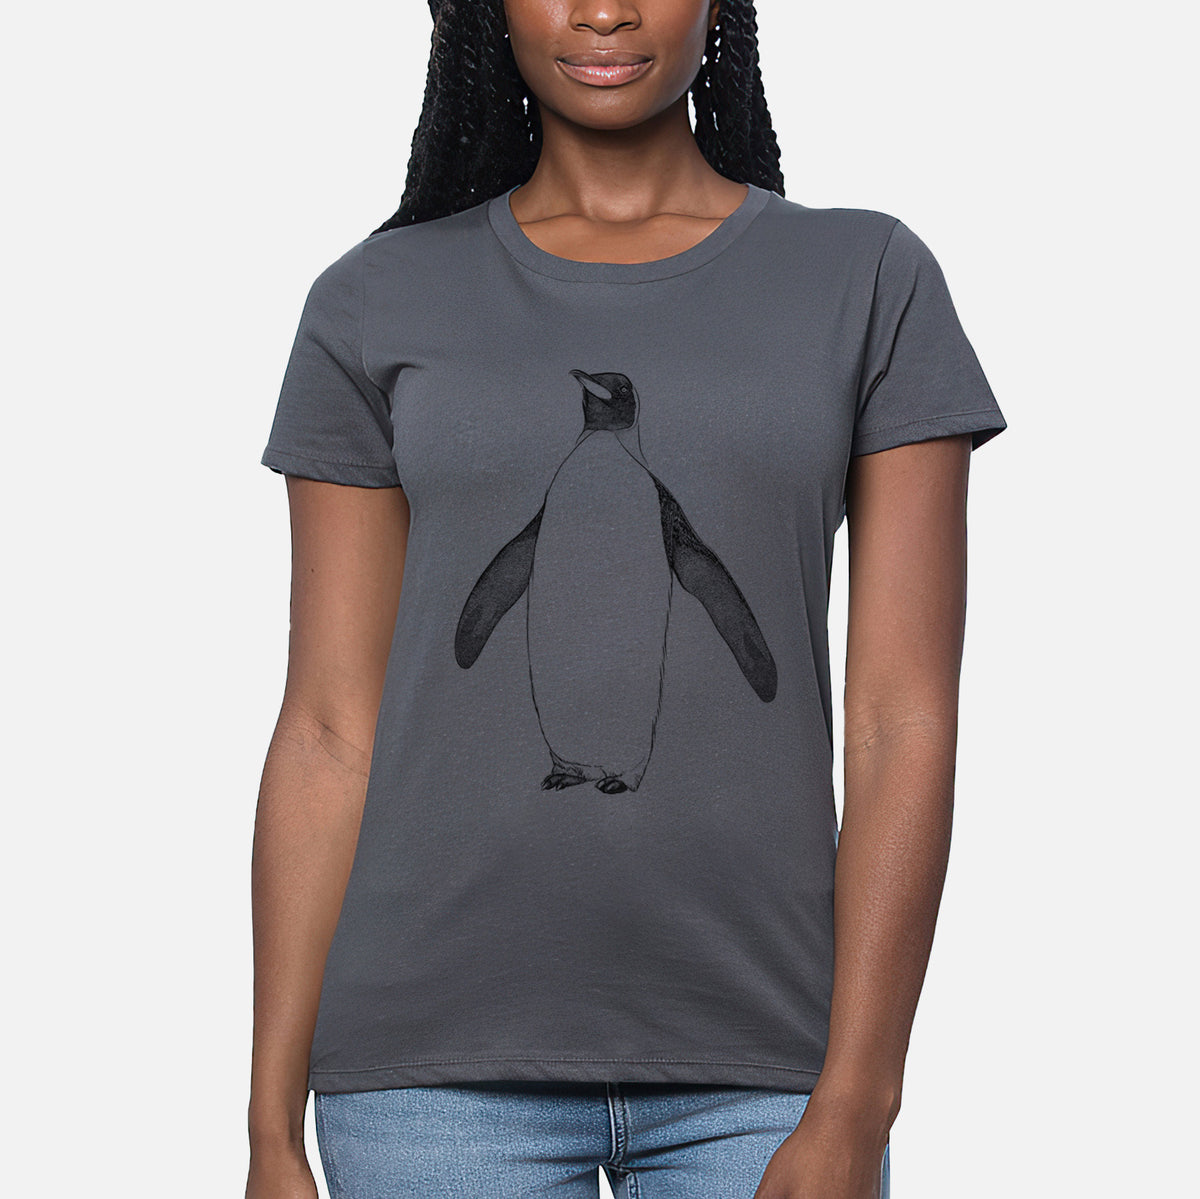 Emperor Penguin - Aptenodytes forsteri - Women&#39;s Crewneck - Made in USA - 100% Organic Cotton